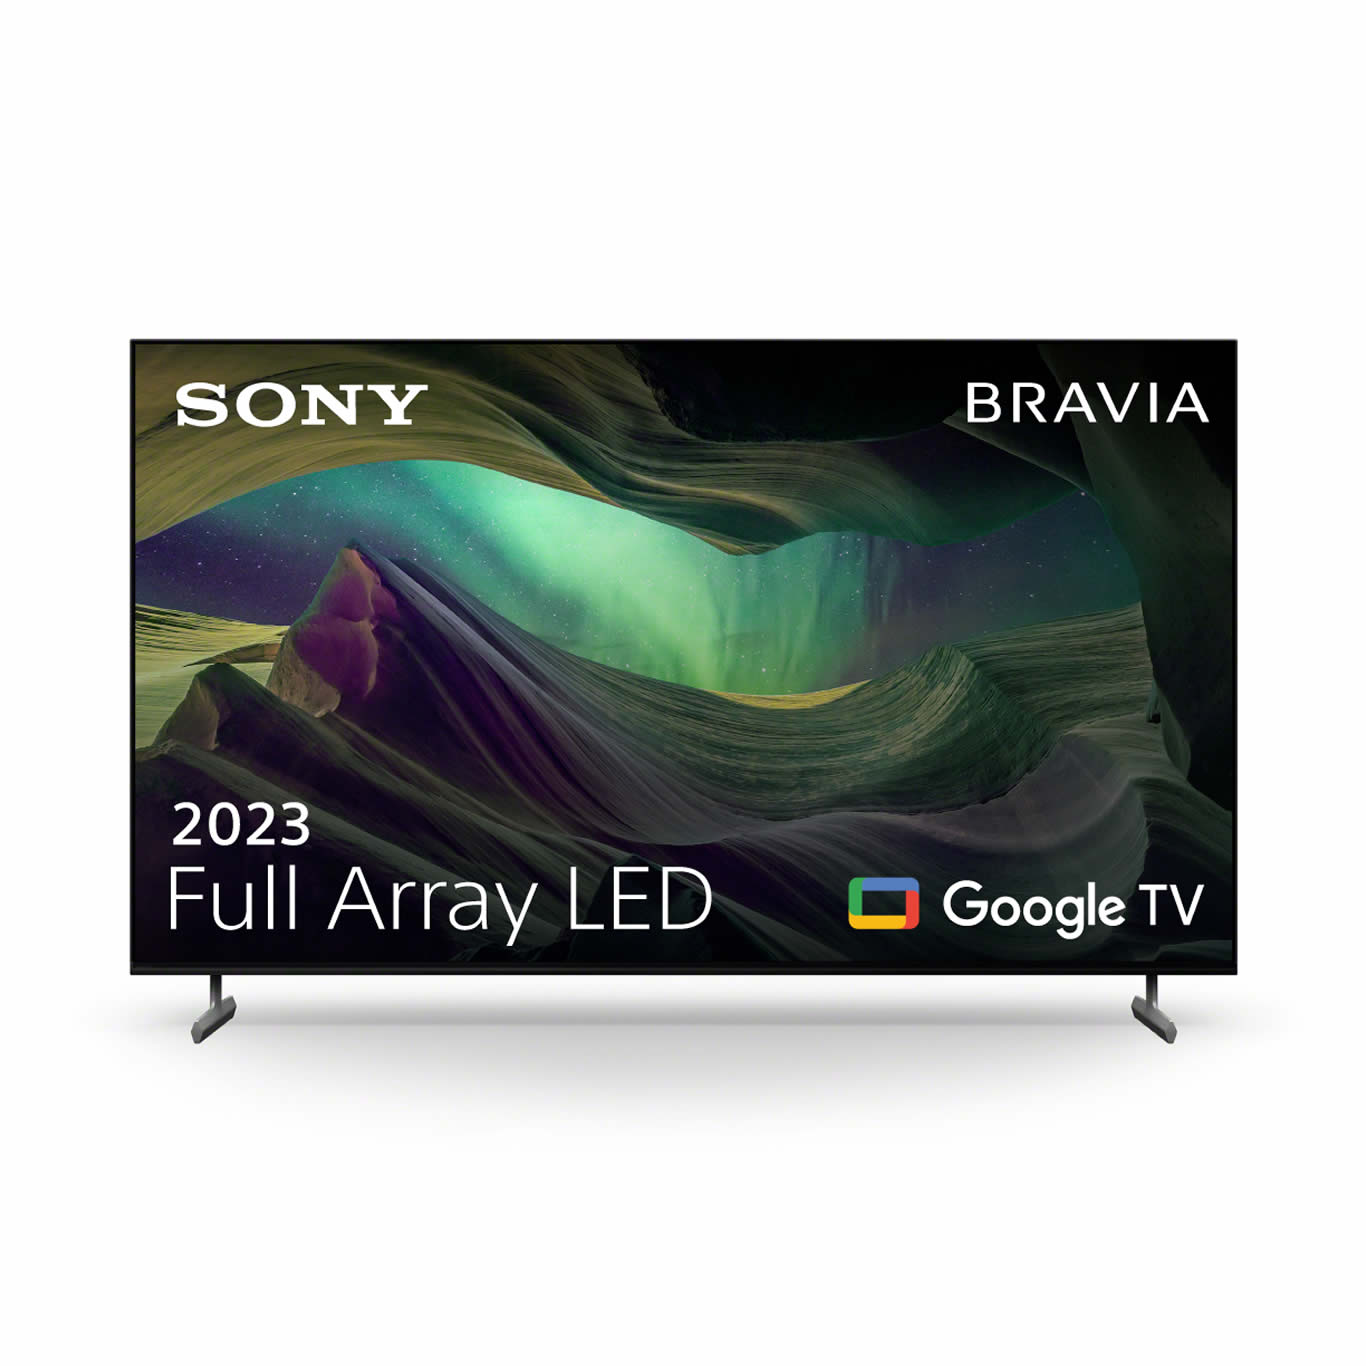 Sony 55inch 4K HDR Full Array LED SMART TV Google Wi-Fi